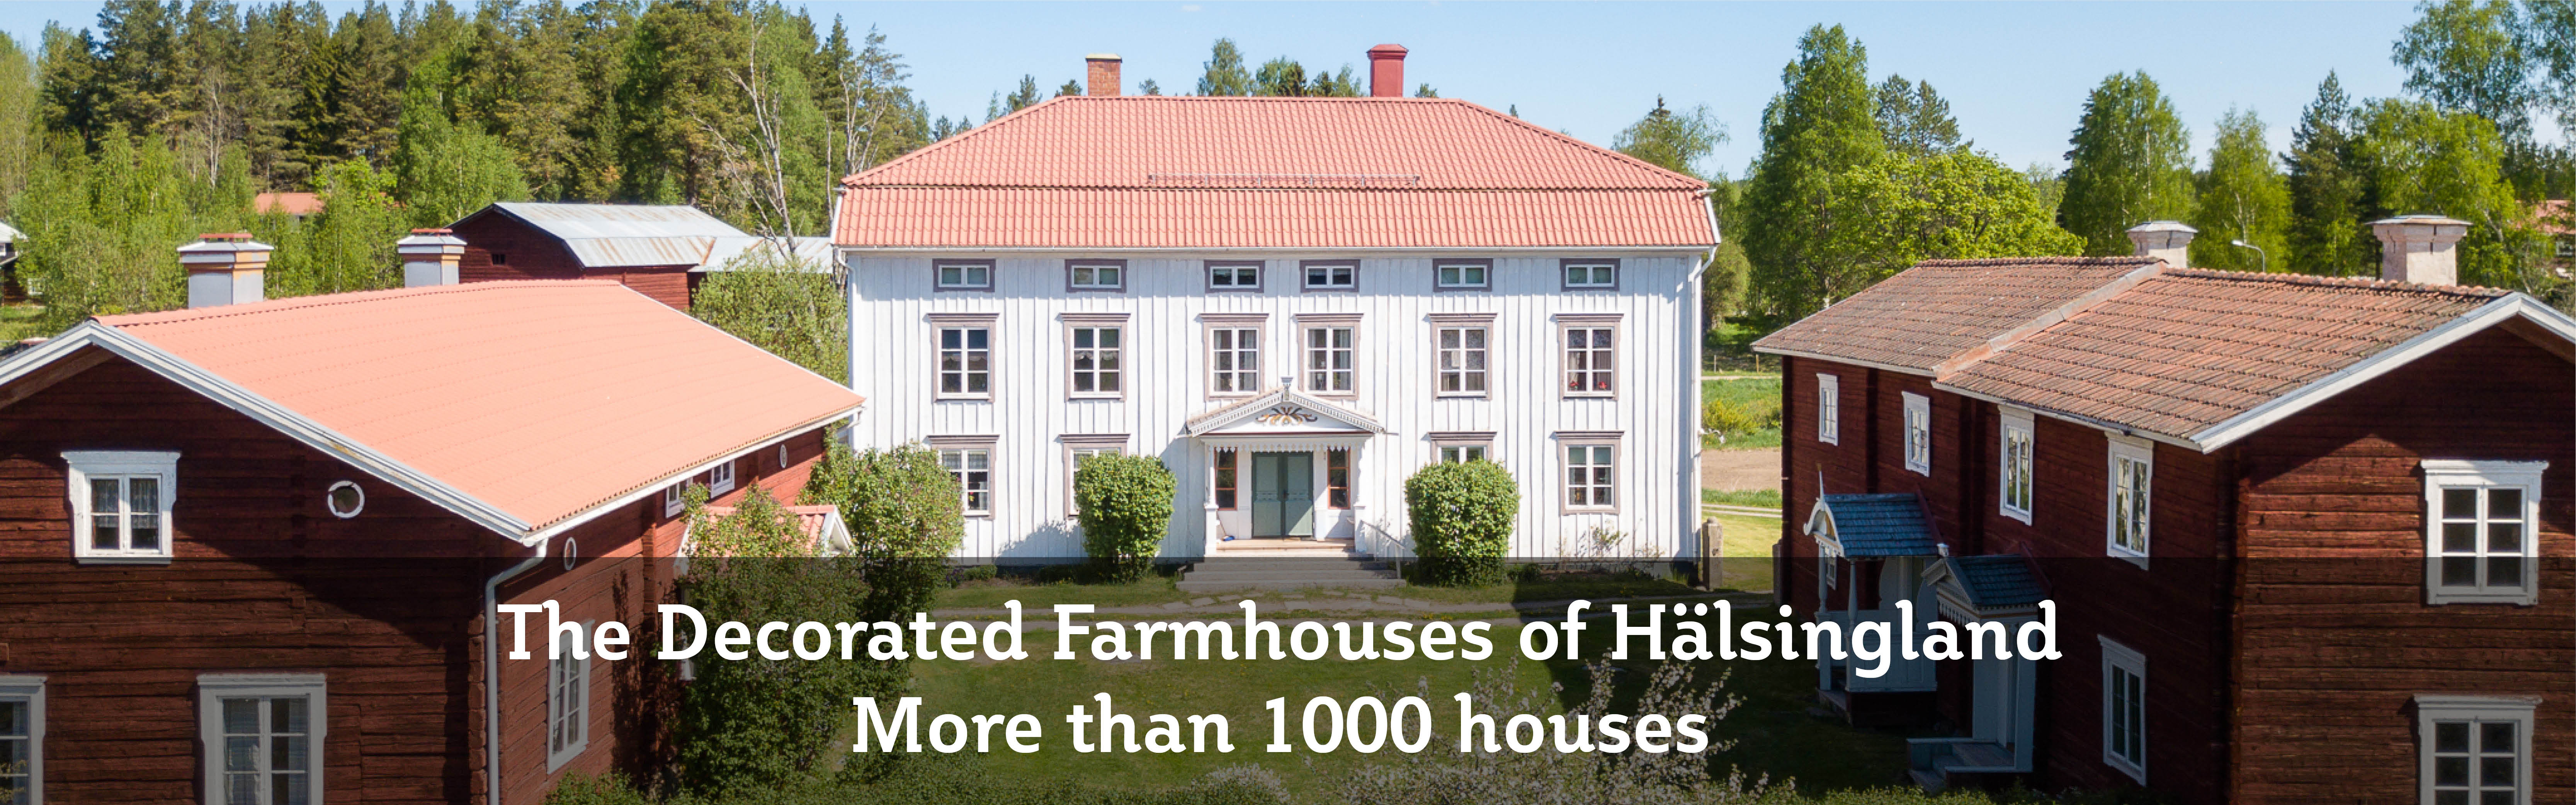 More than 1000 houses